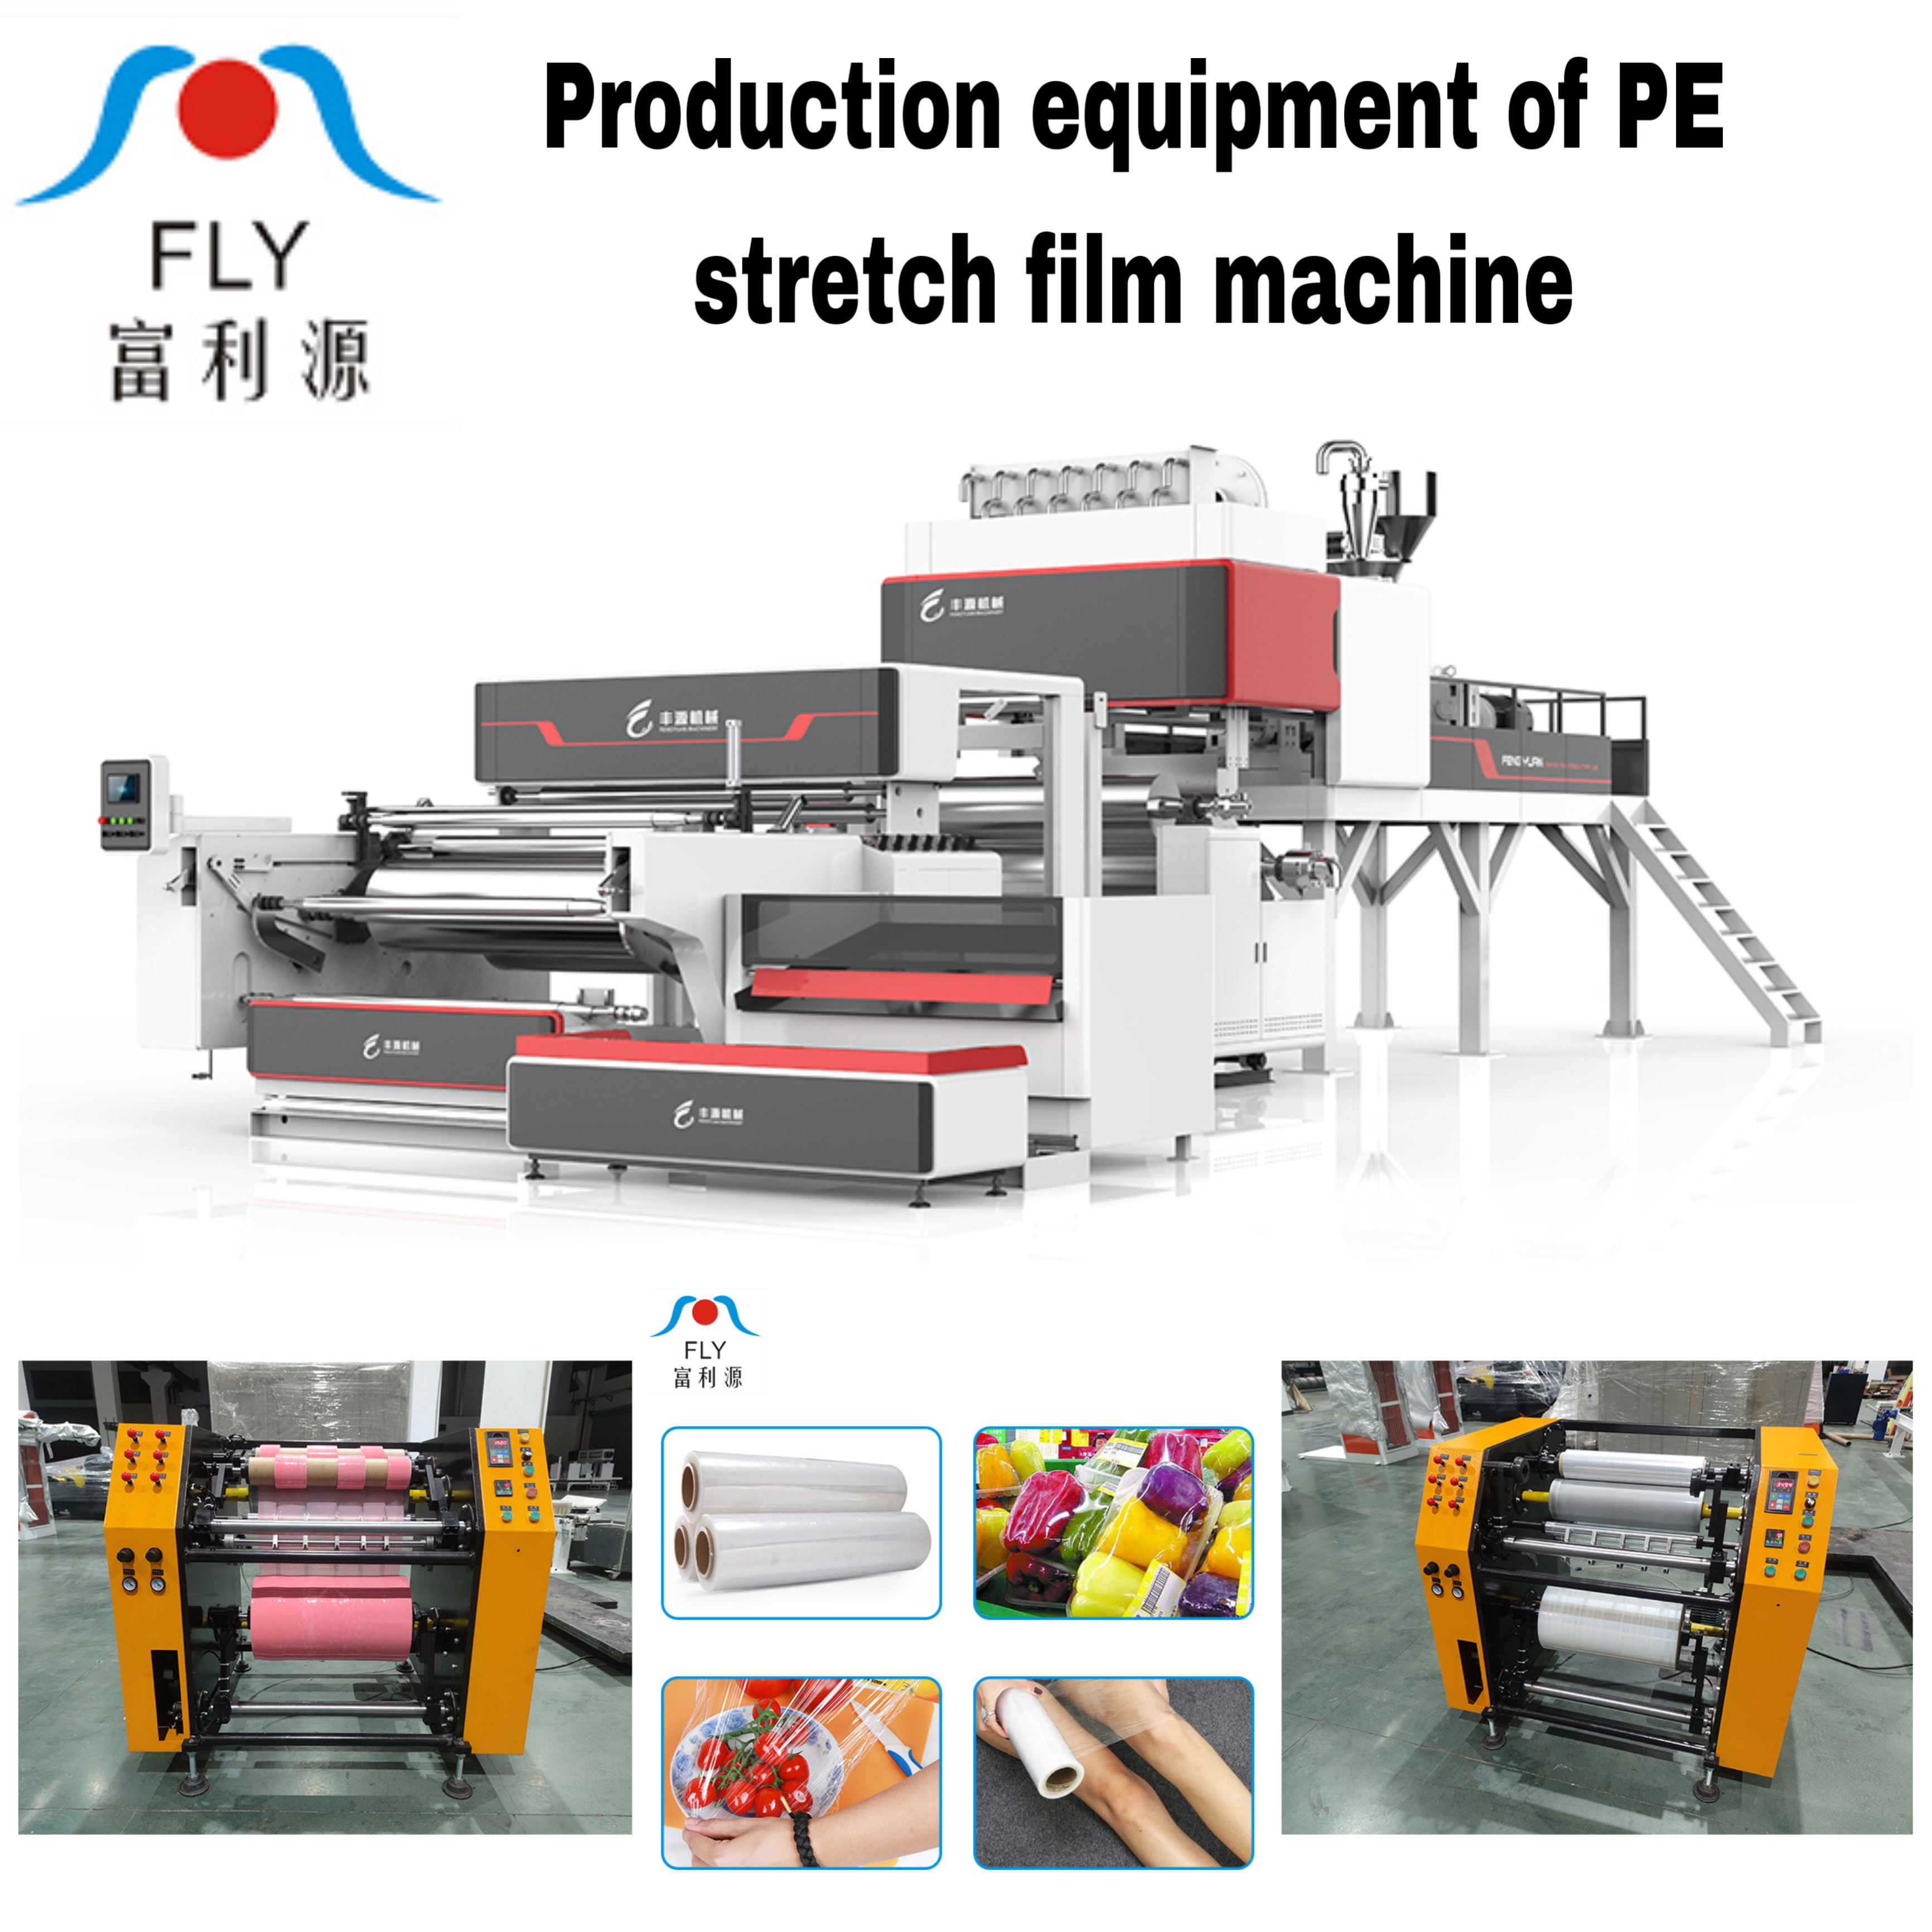 FLY PE stretch film machine production equipment